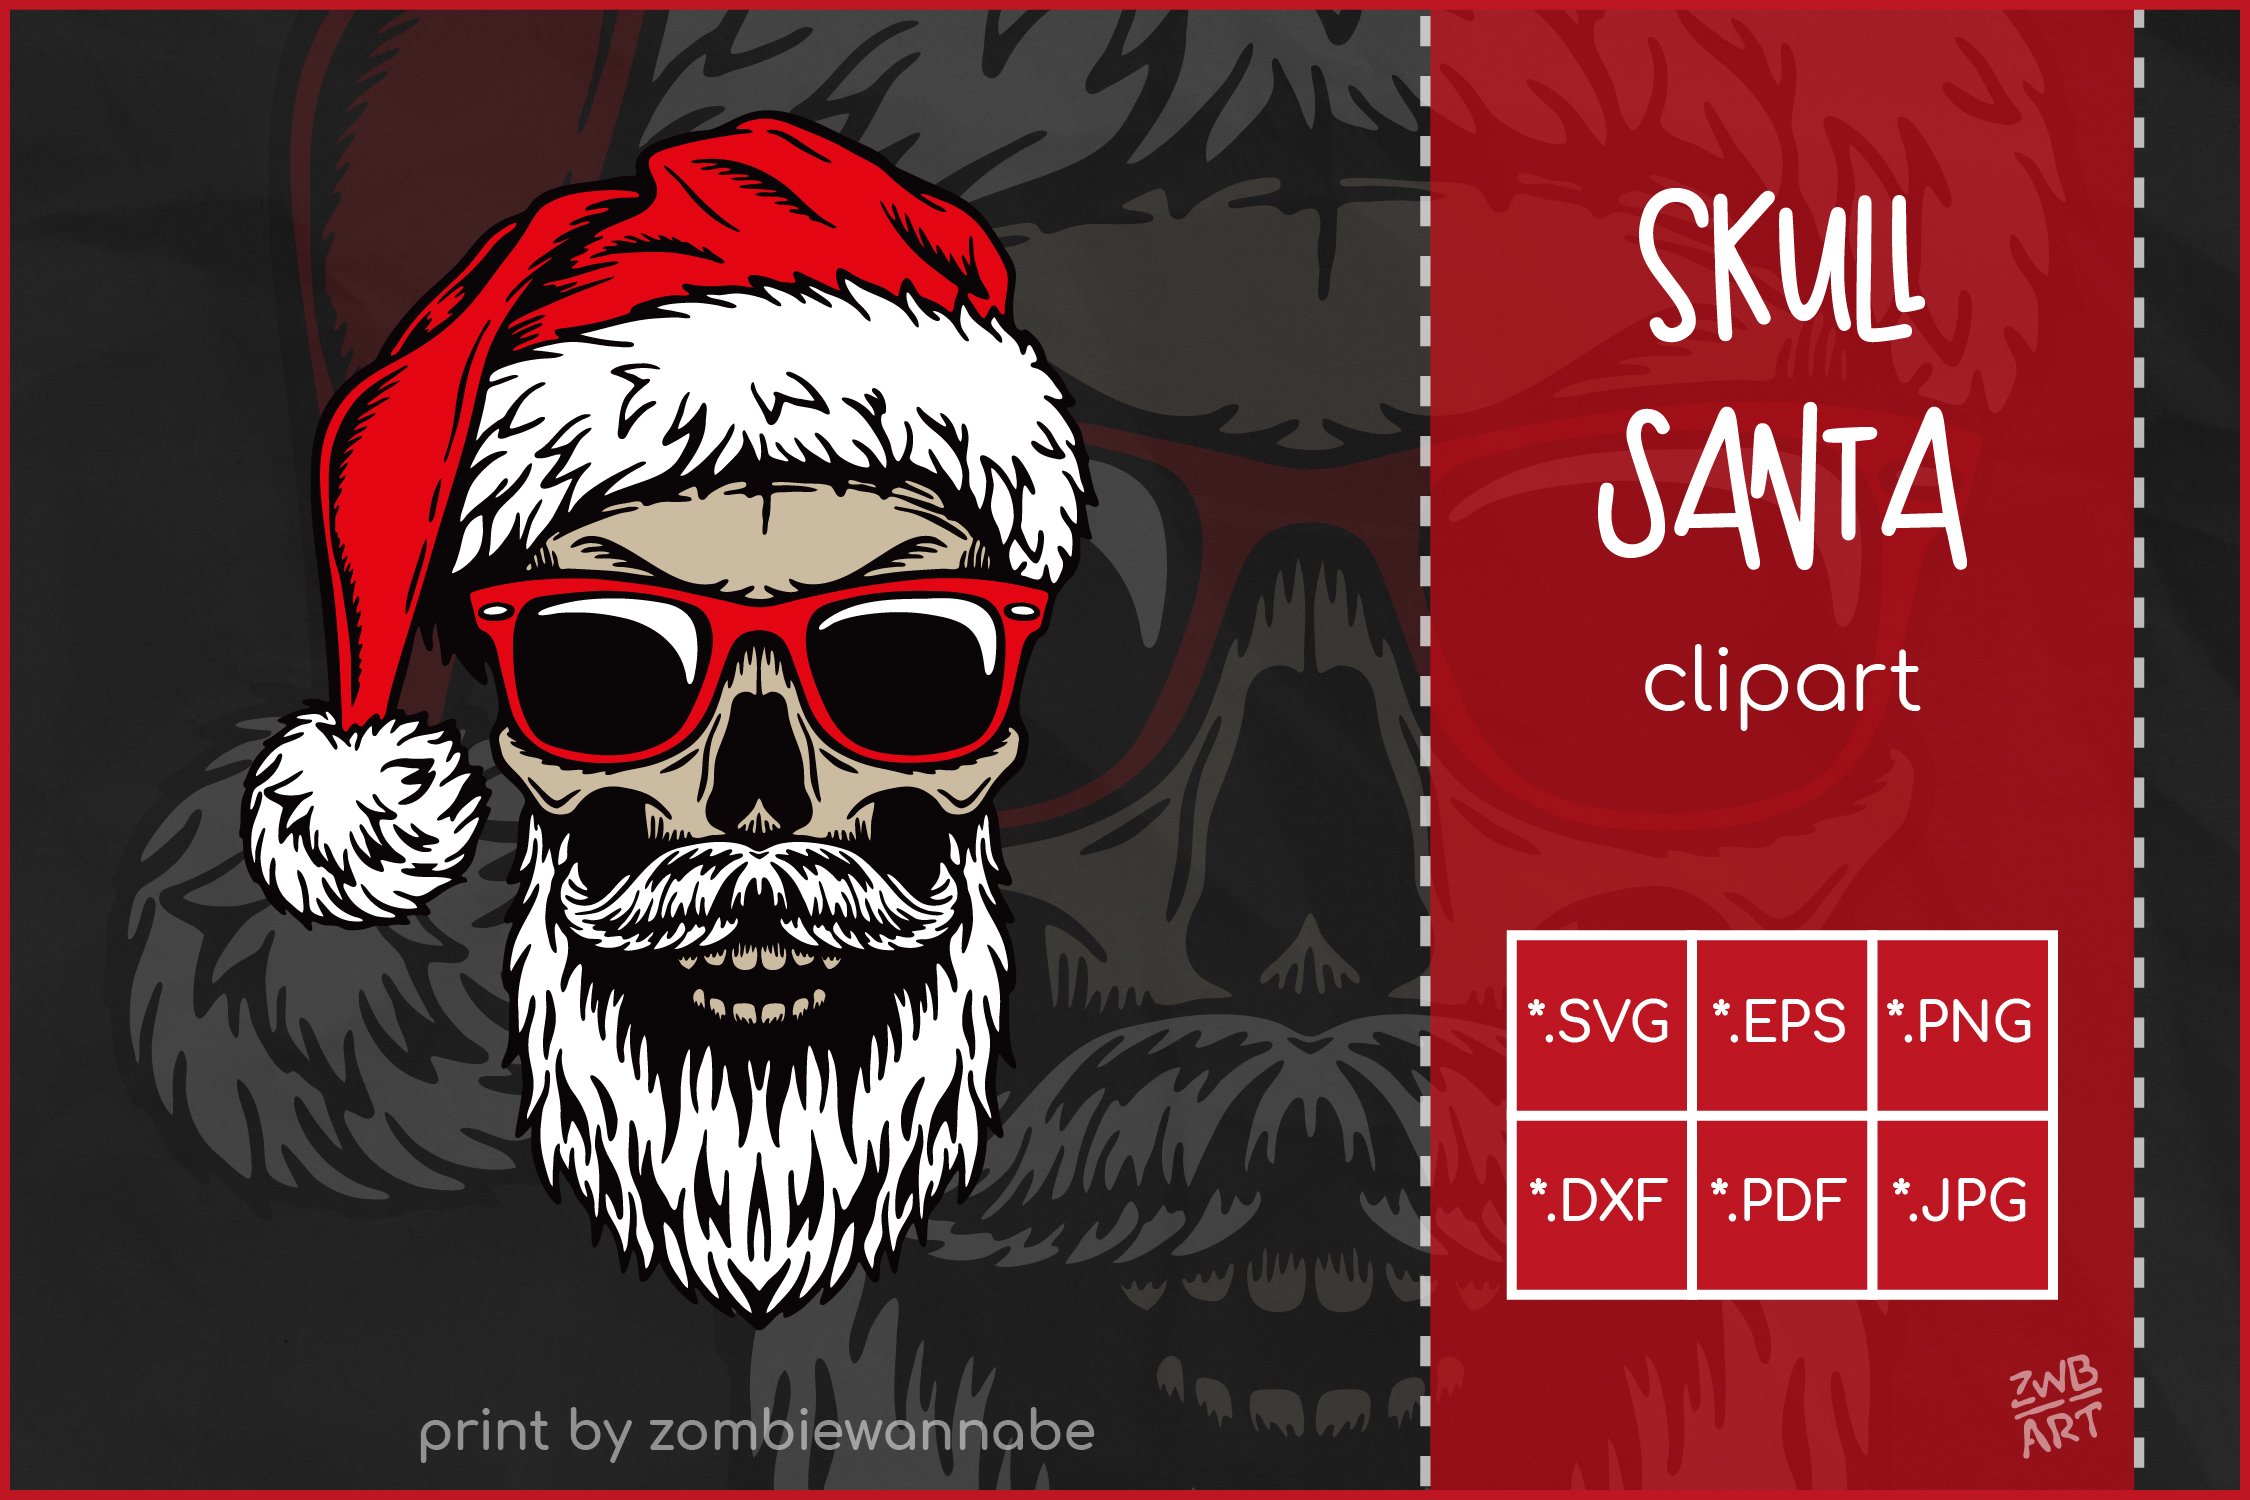 Images of a nightmarish image of Santa's zombie.